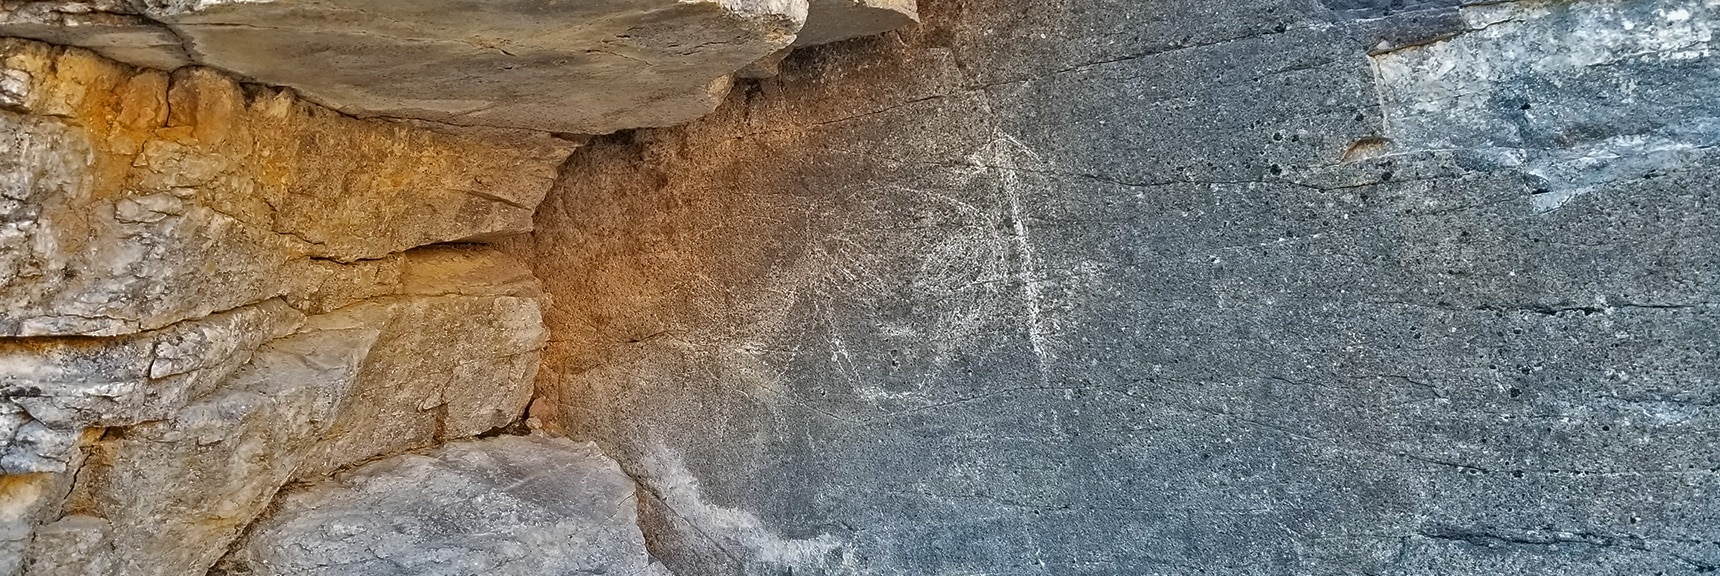 First Petroglyph Appears to Be Modern Graffiti. | Petroglyph Canyon | Sloan Canyon National Conservation Area, Nevada